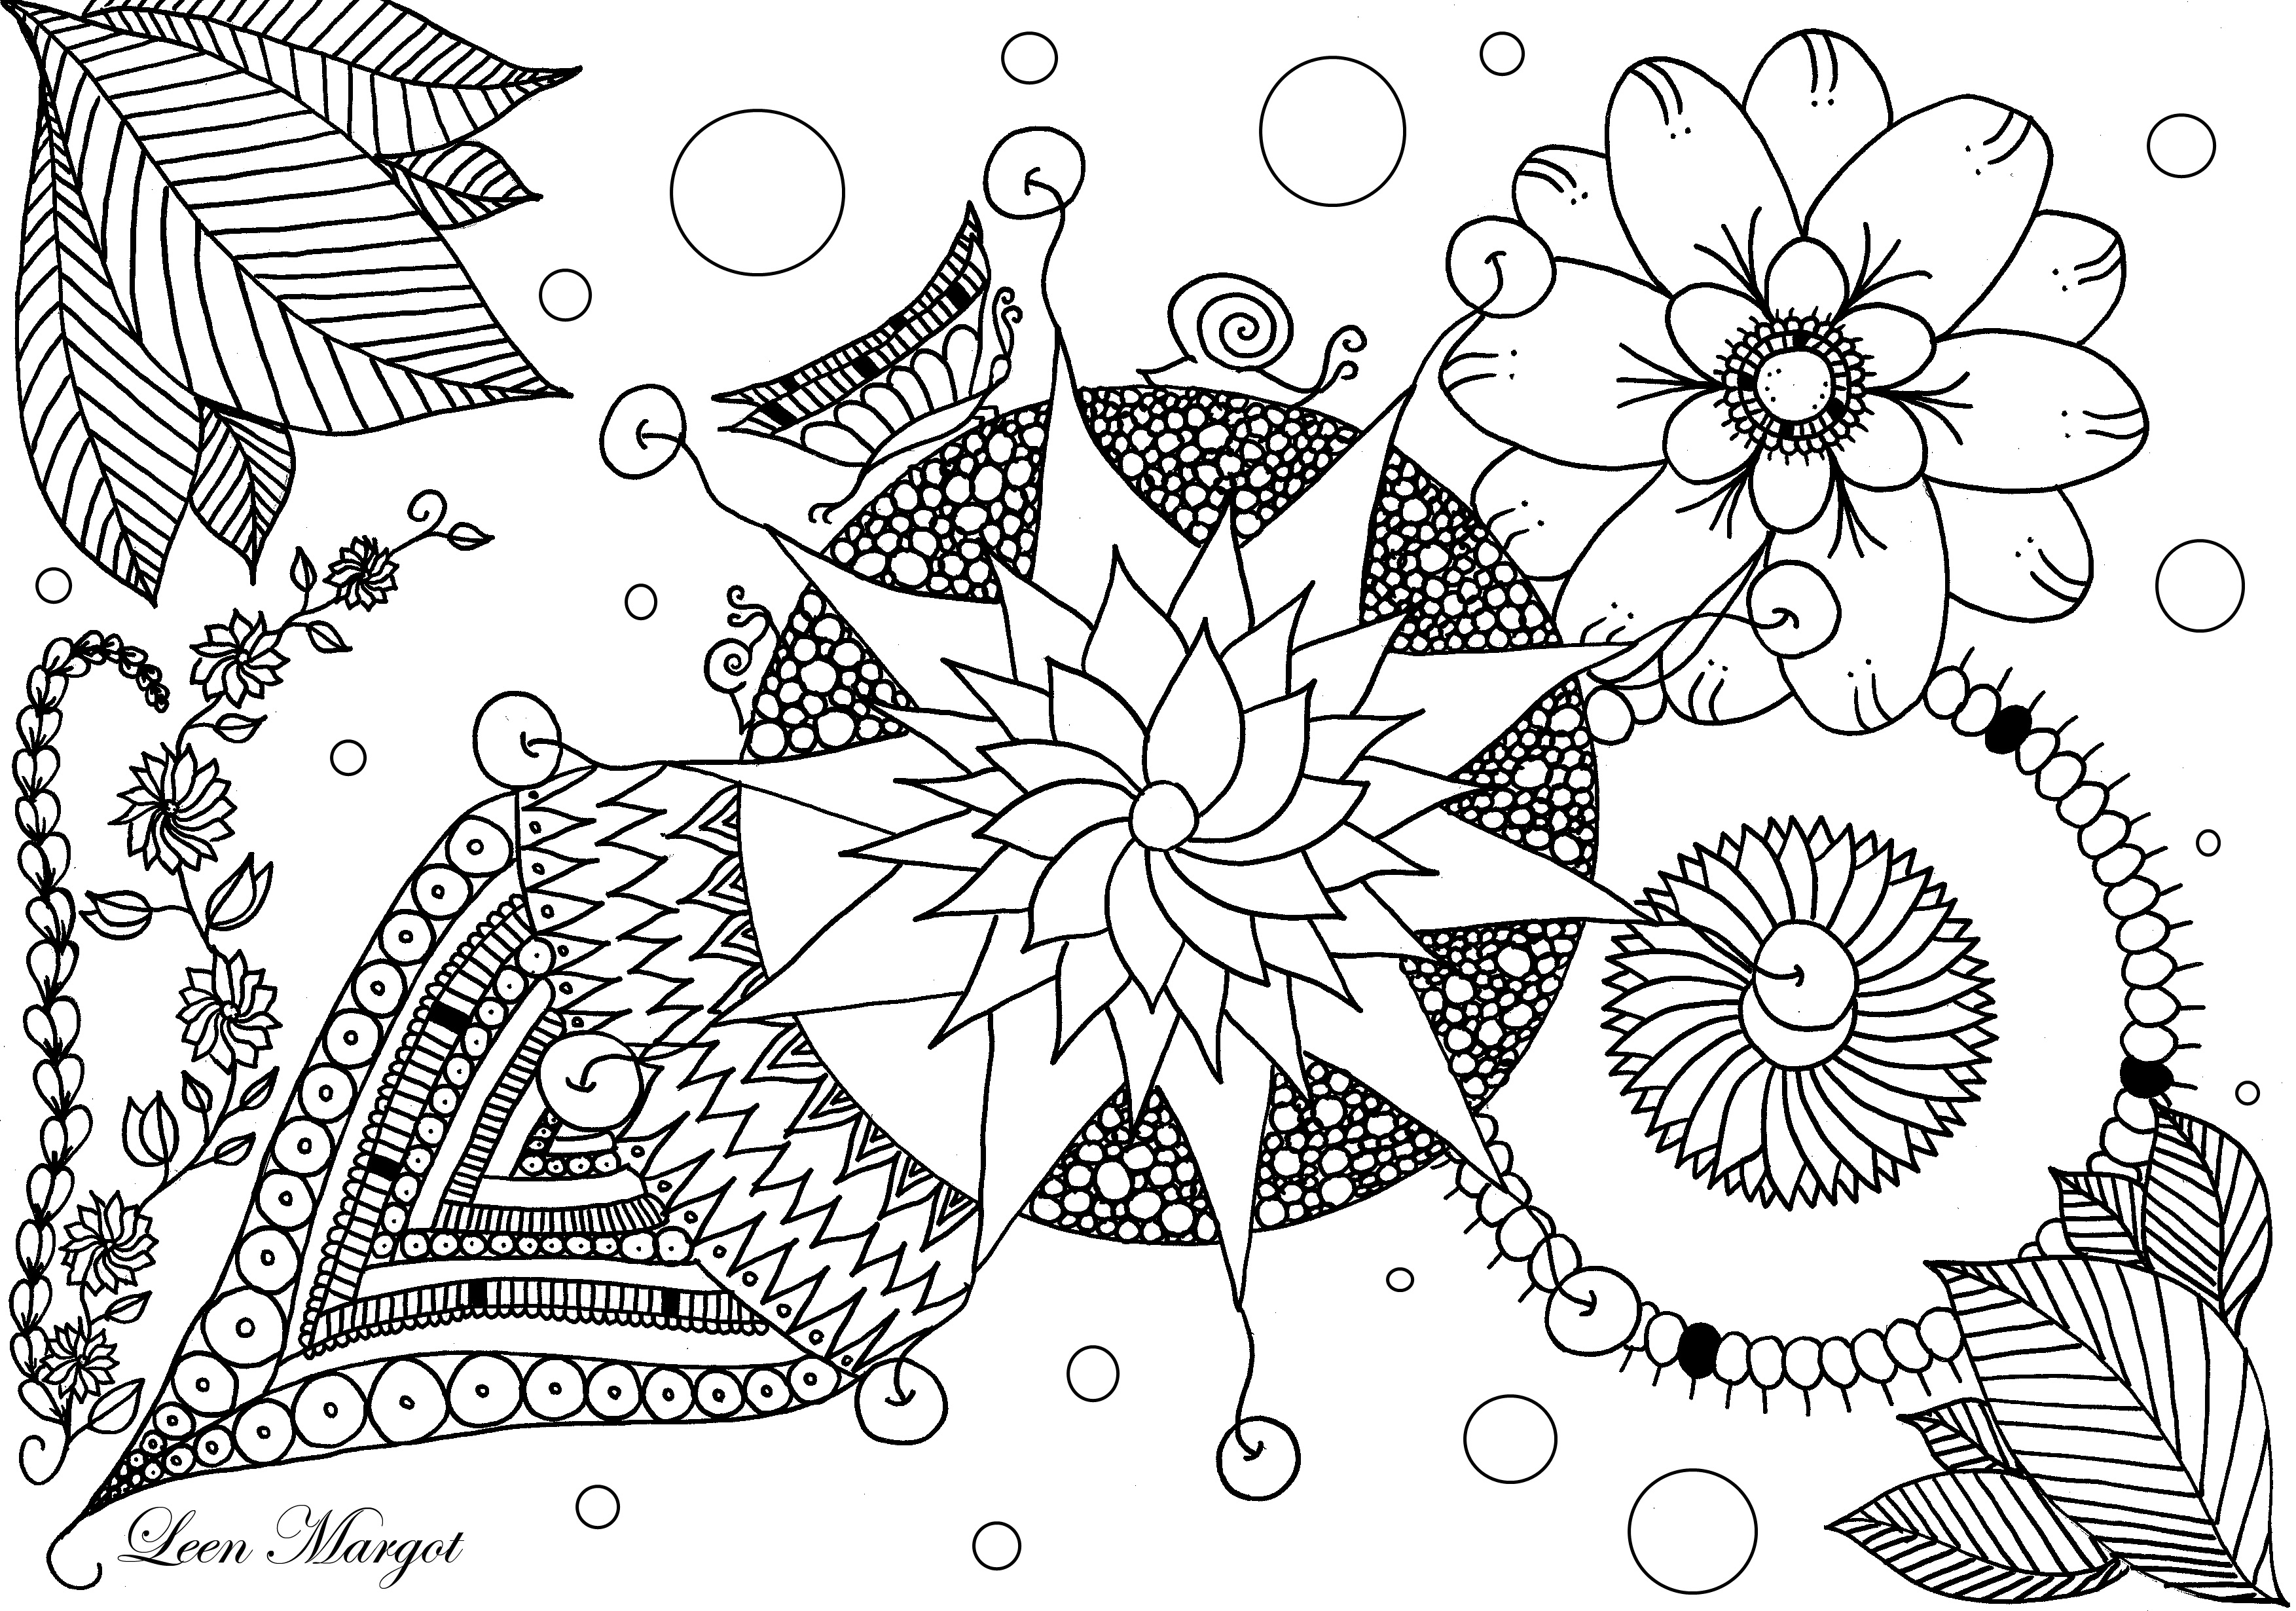 artherapie coloriage gratuit LeenMargot doodle fleurs